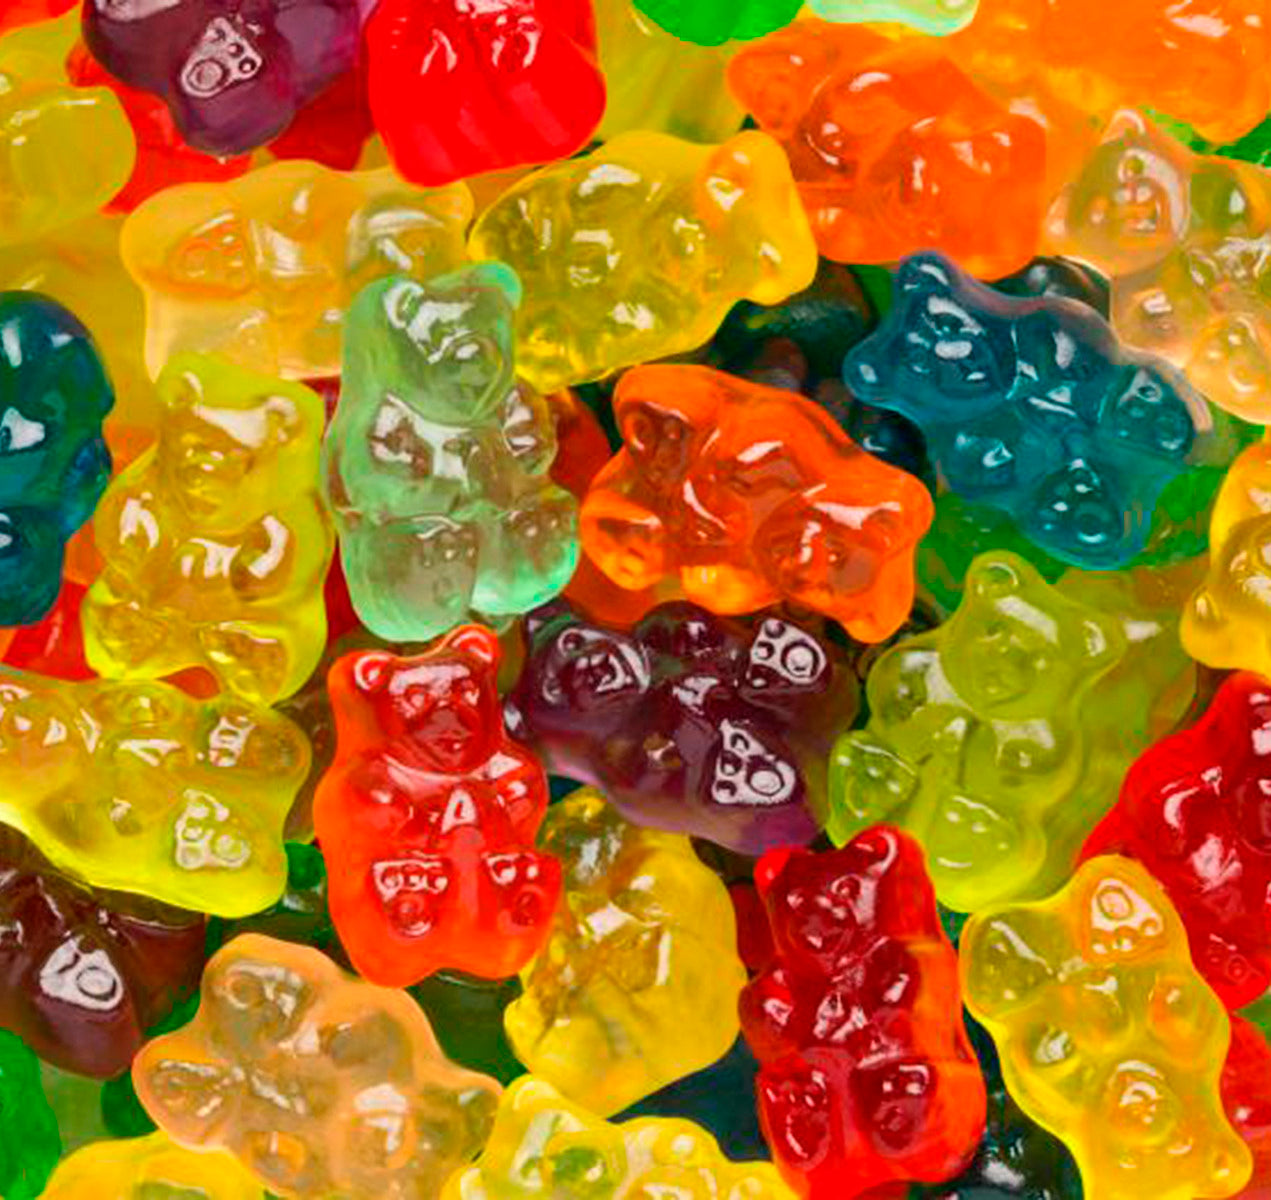 12 Flavor Gummi Bears lb